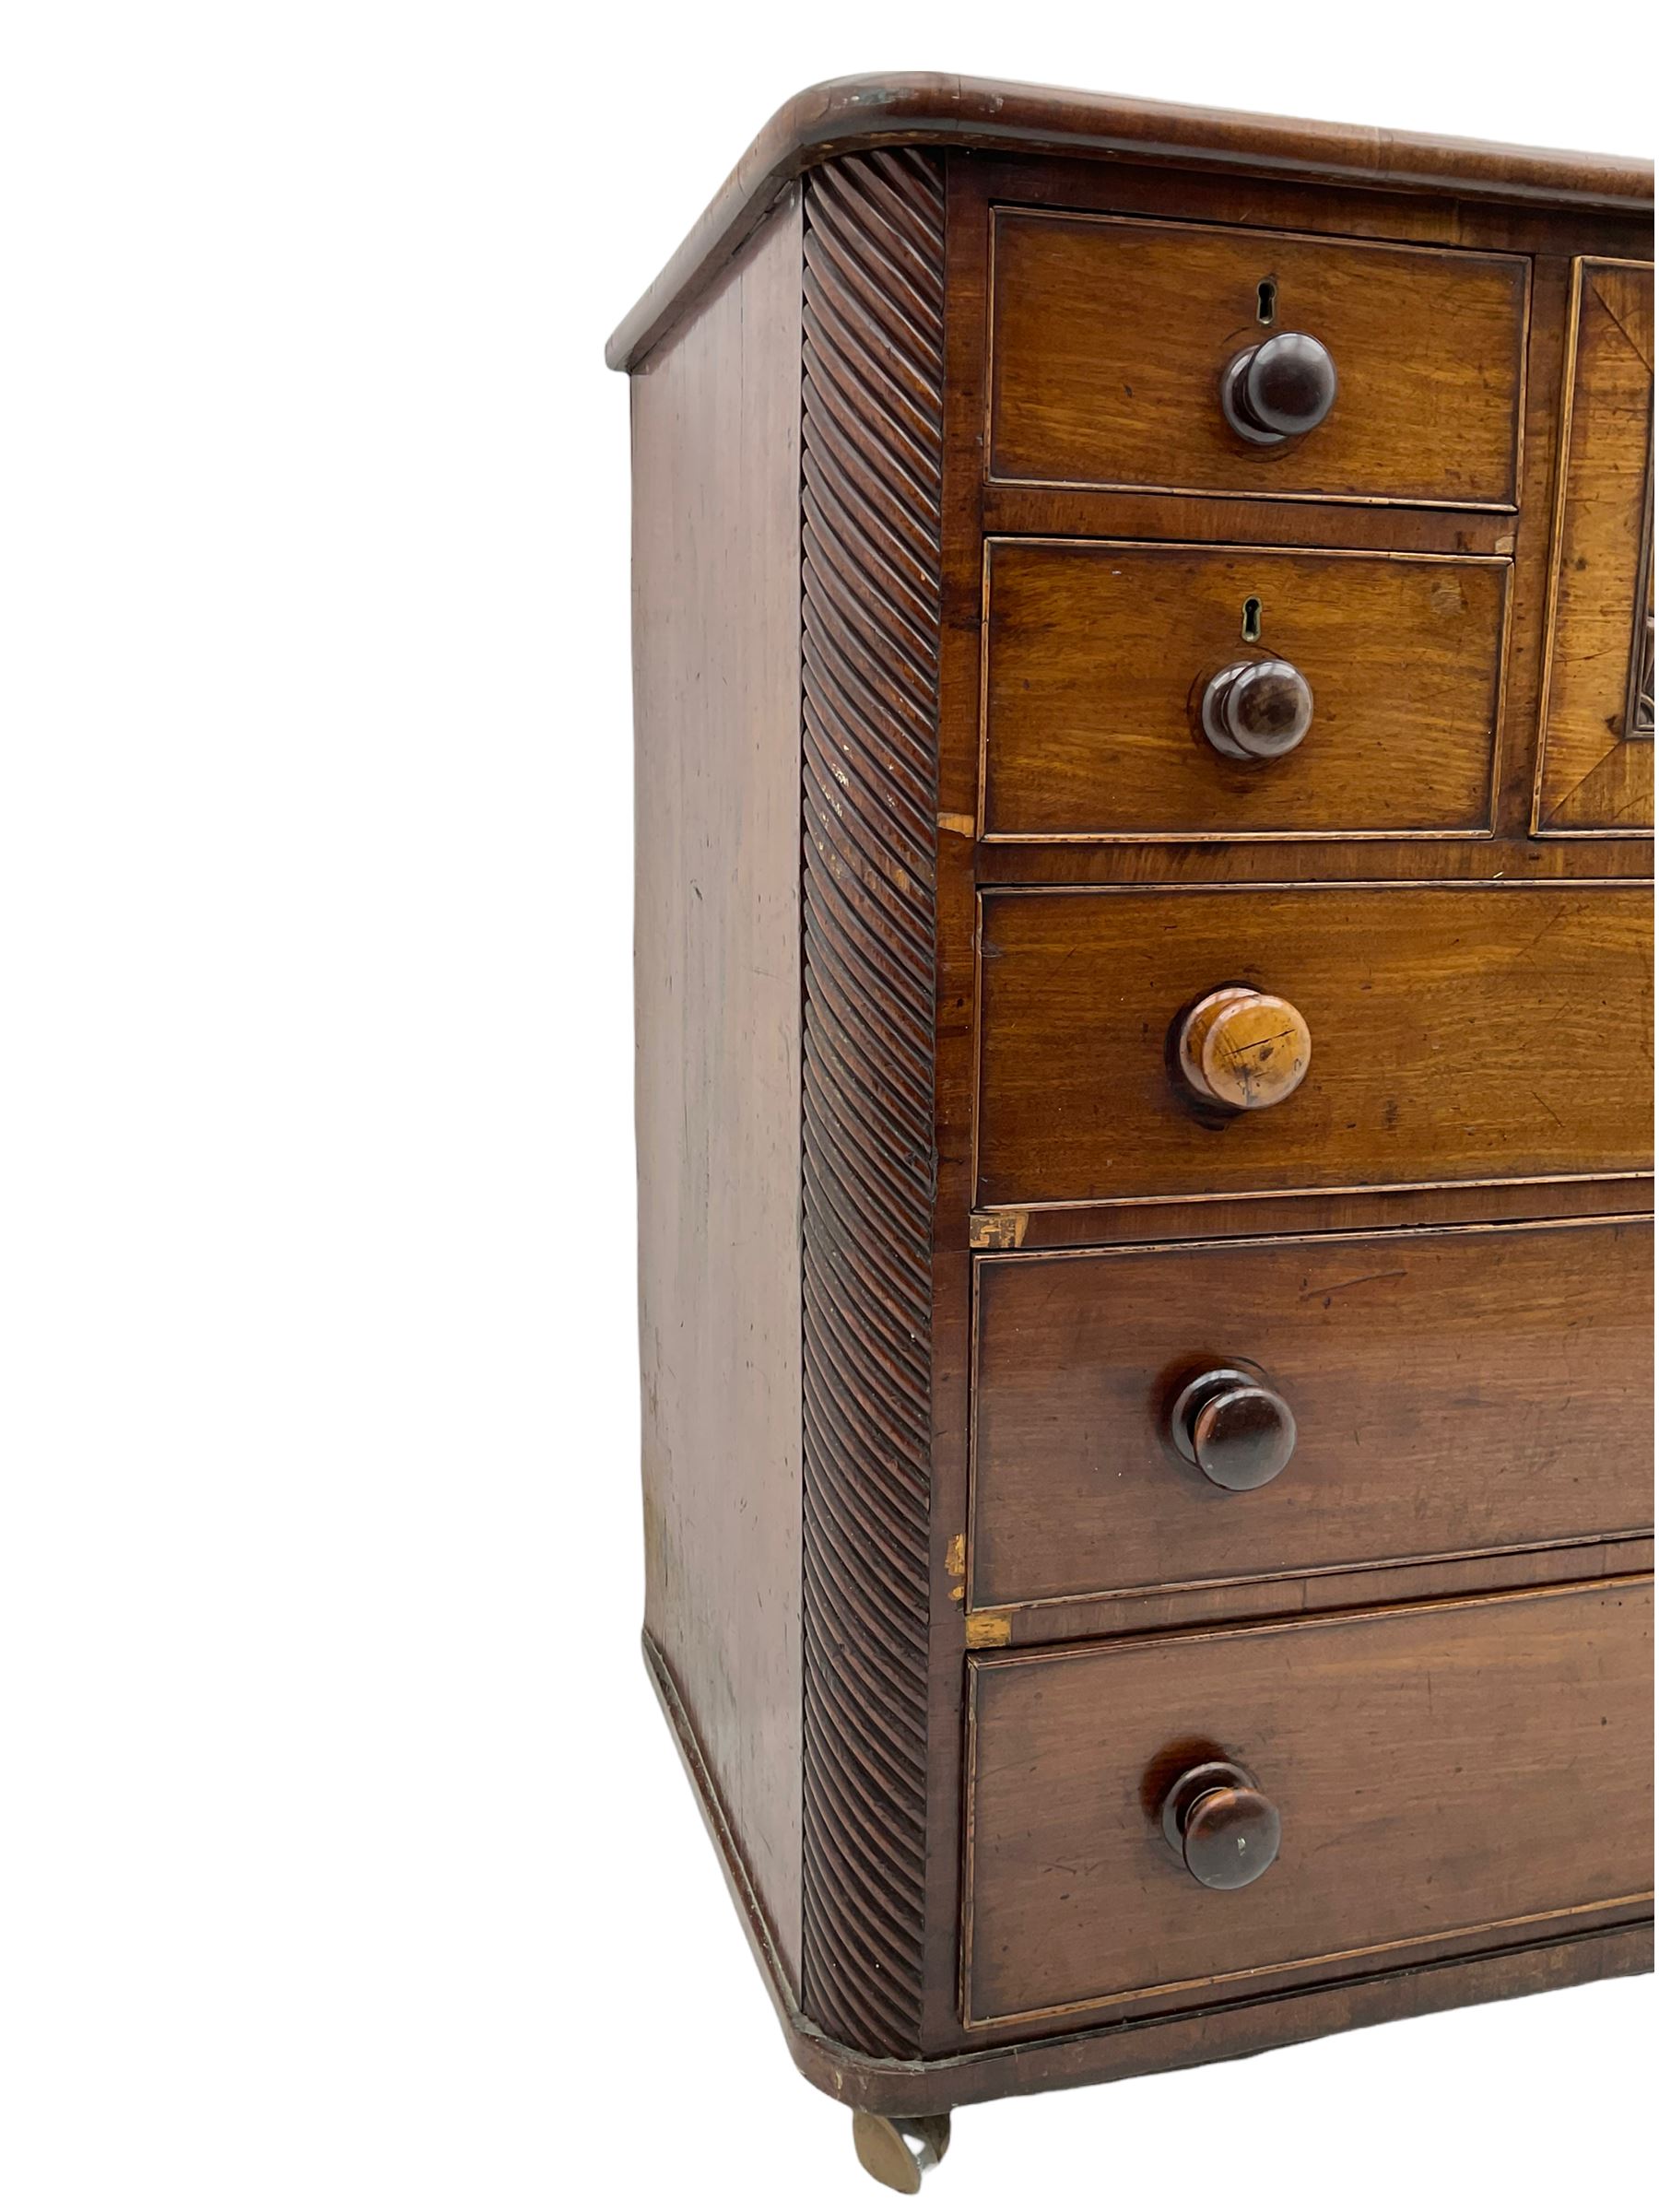 Early 19th century mahogany chest - Image 7 of 9